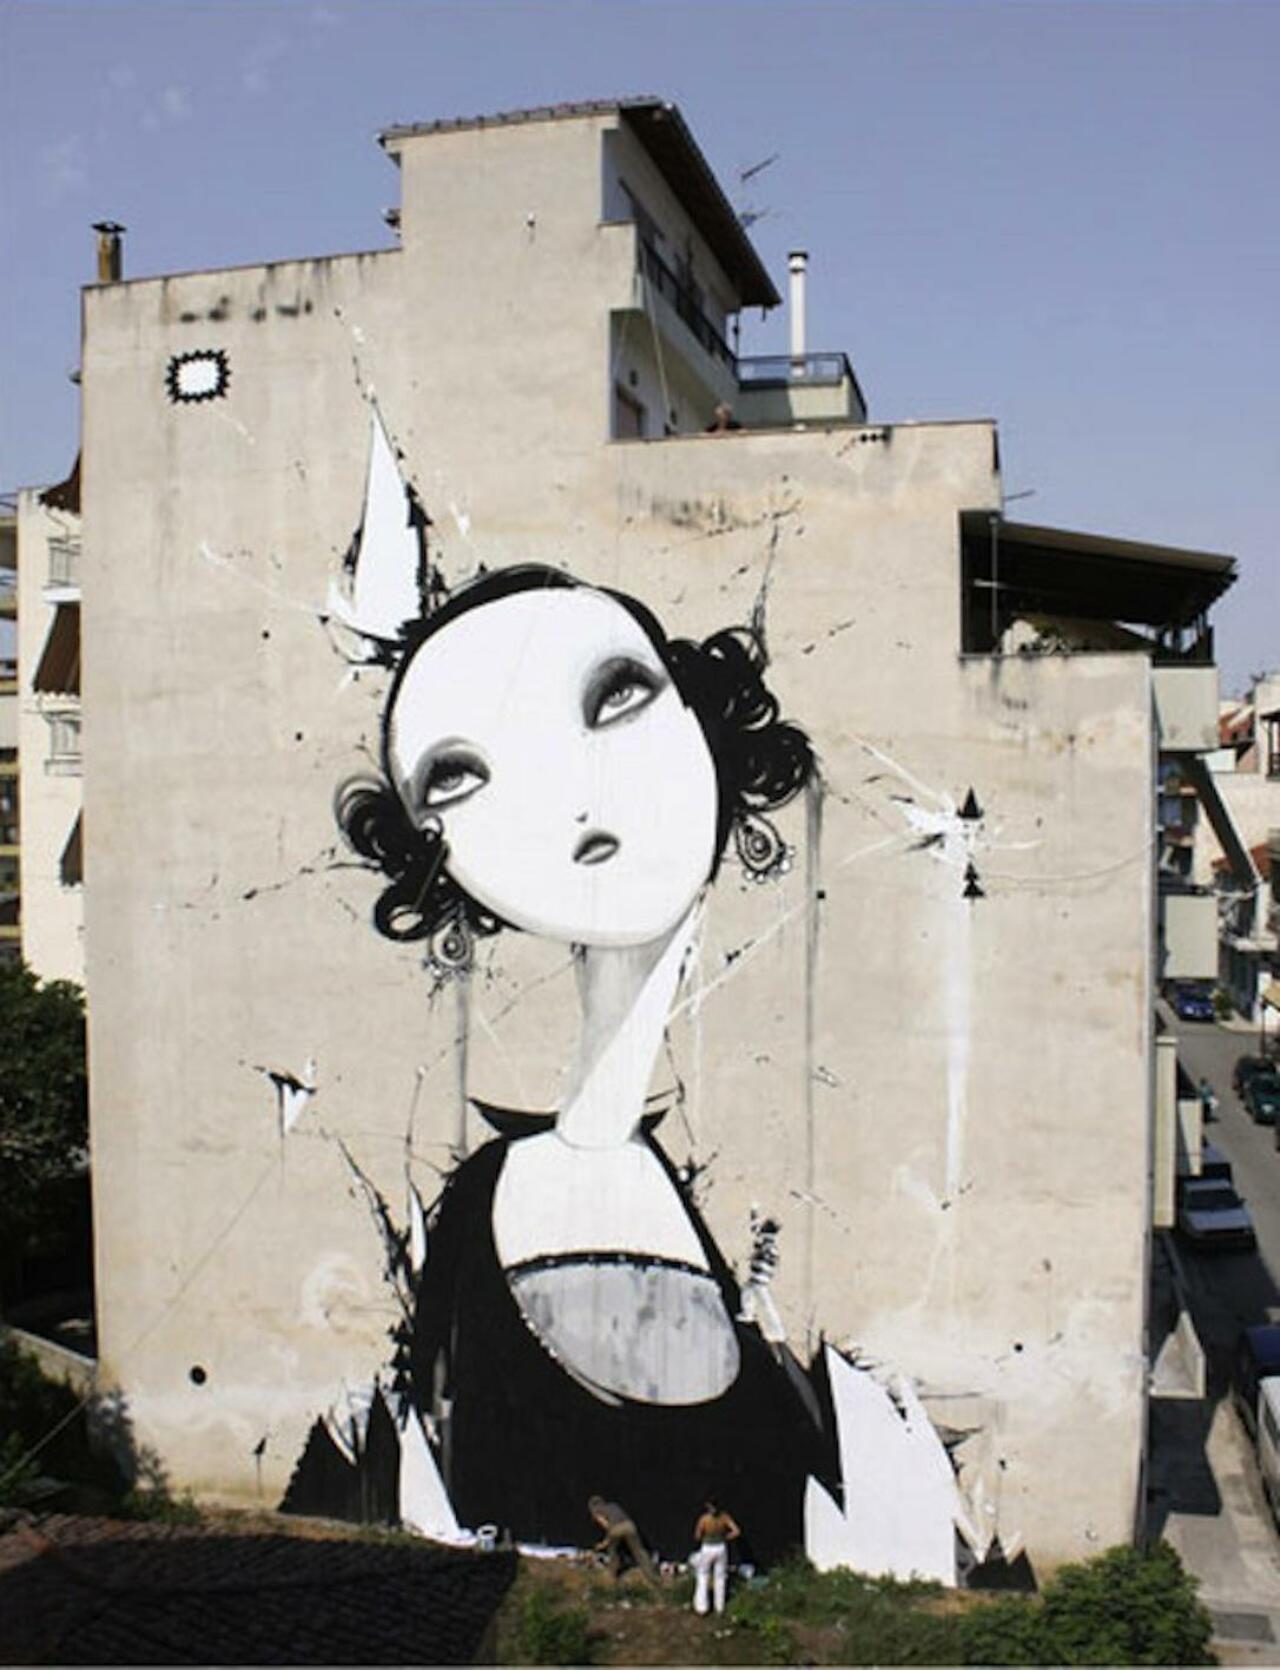 #Streetart #urbanart #graffiti #mural #acrylique de l'artiste Alexsandros Vasmoulakis, Athènes, Grèce http://t.co/UOoB7uyb5c RT @Brindille_